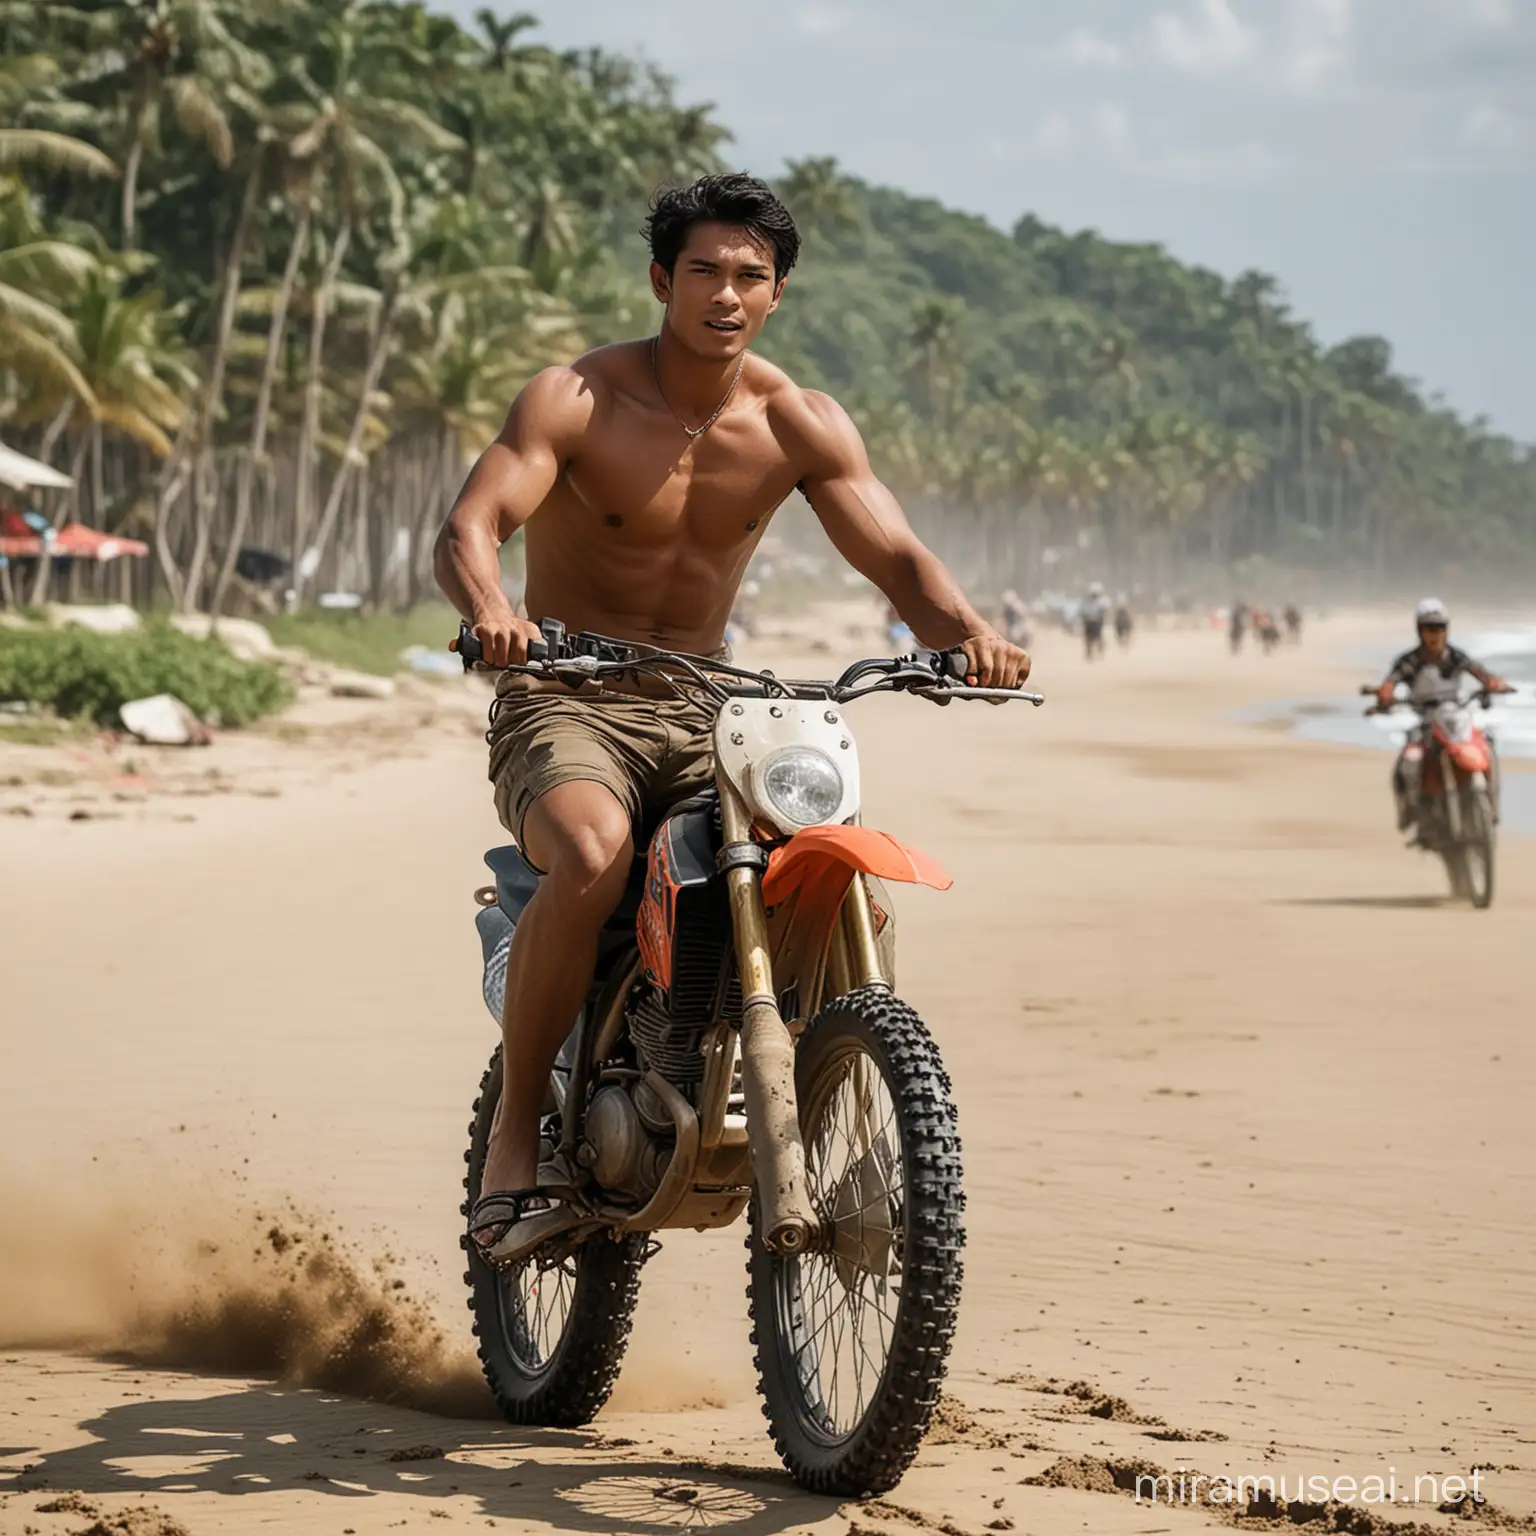 Indonesian Man Riding Dirt Bike on Busy Beach